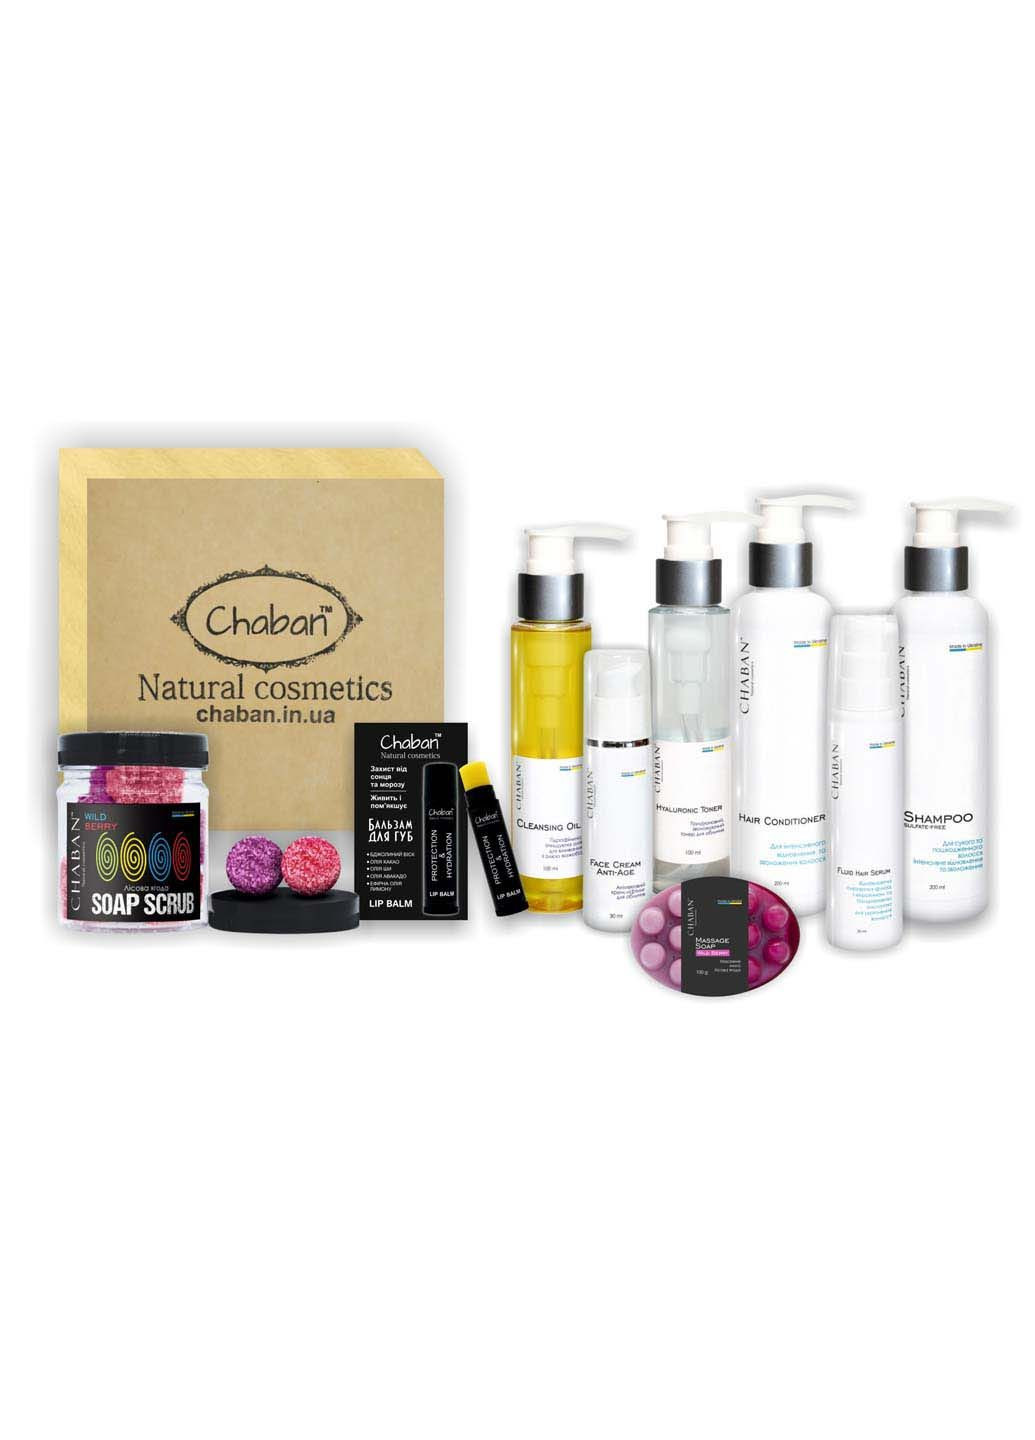 Подарунковий набір Beauty Box №10 All-Inclusive Chaban Natural Cosmetics (280918282)